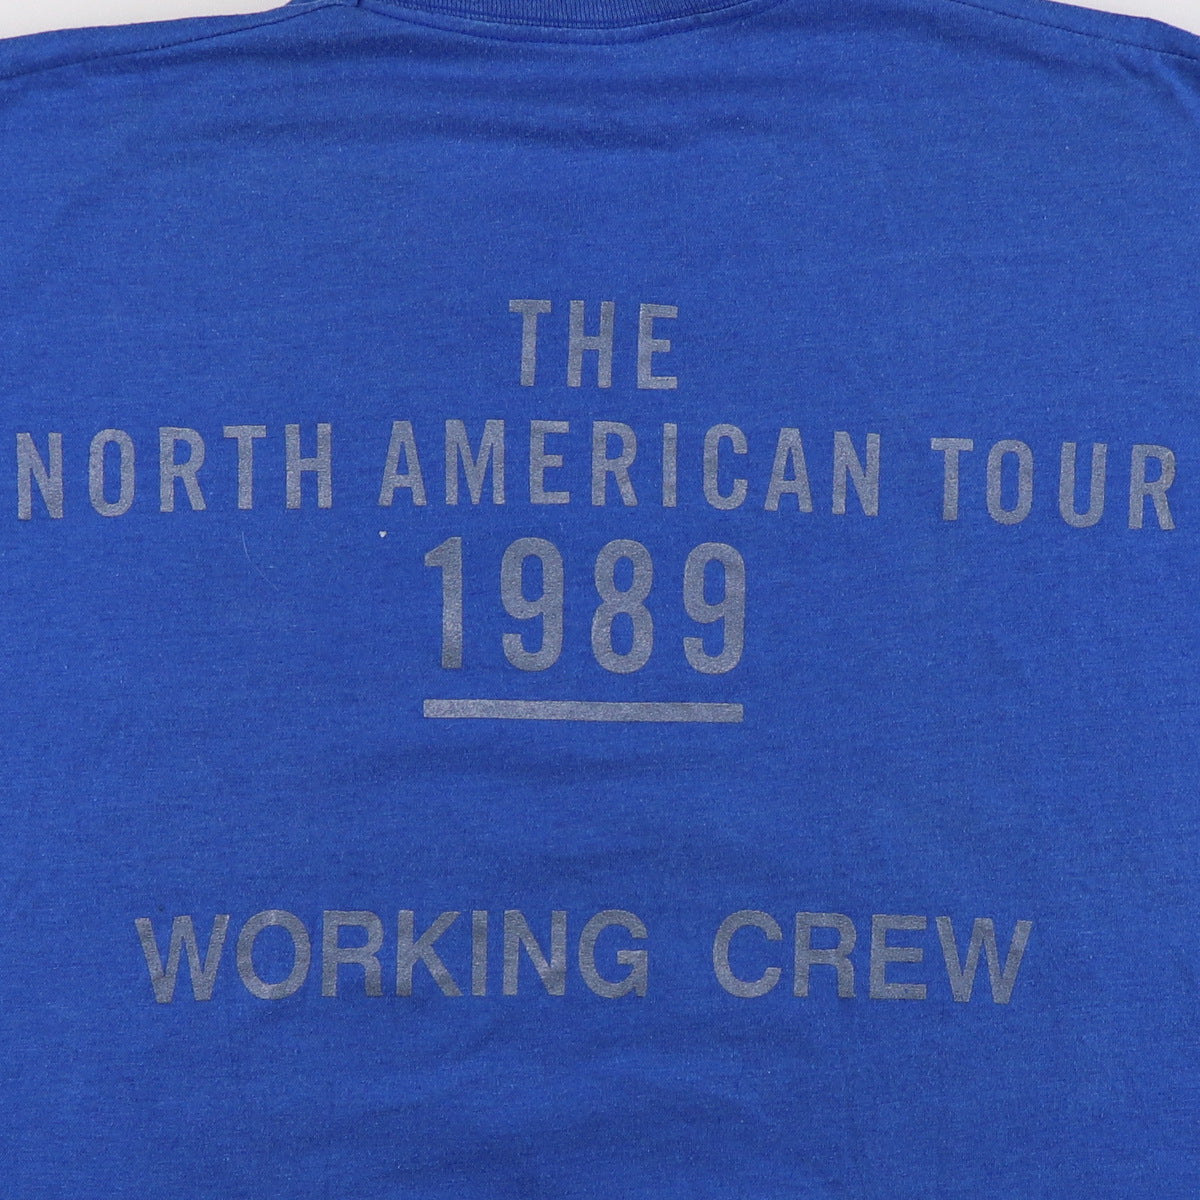 1989 Rolling Stones Steel Wheels Working Crew Tour Shirt